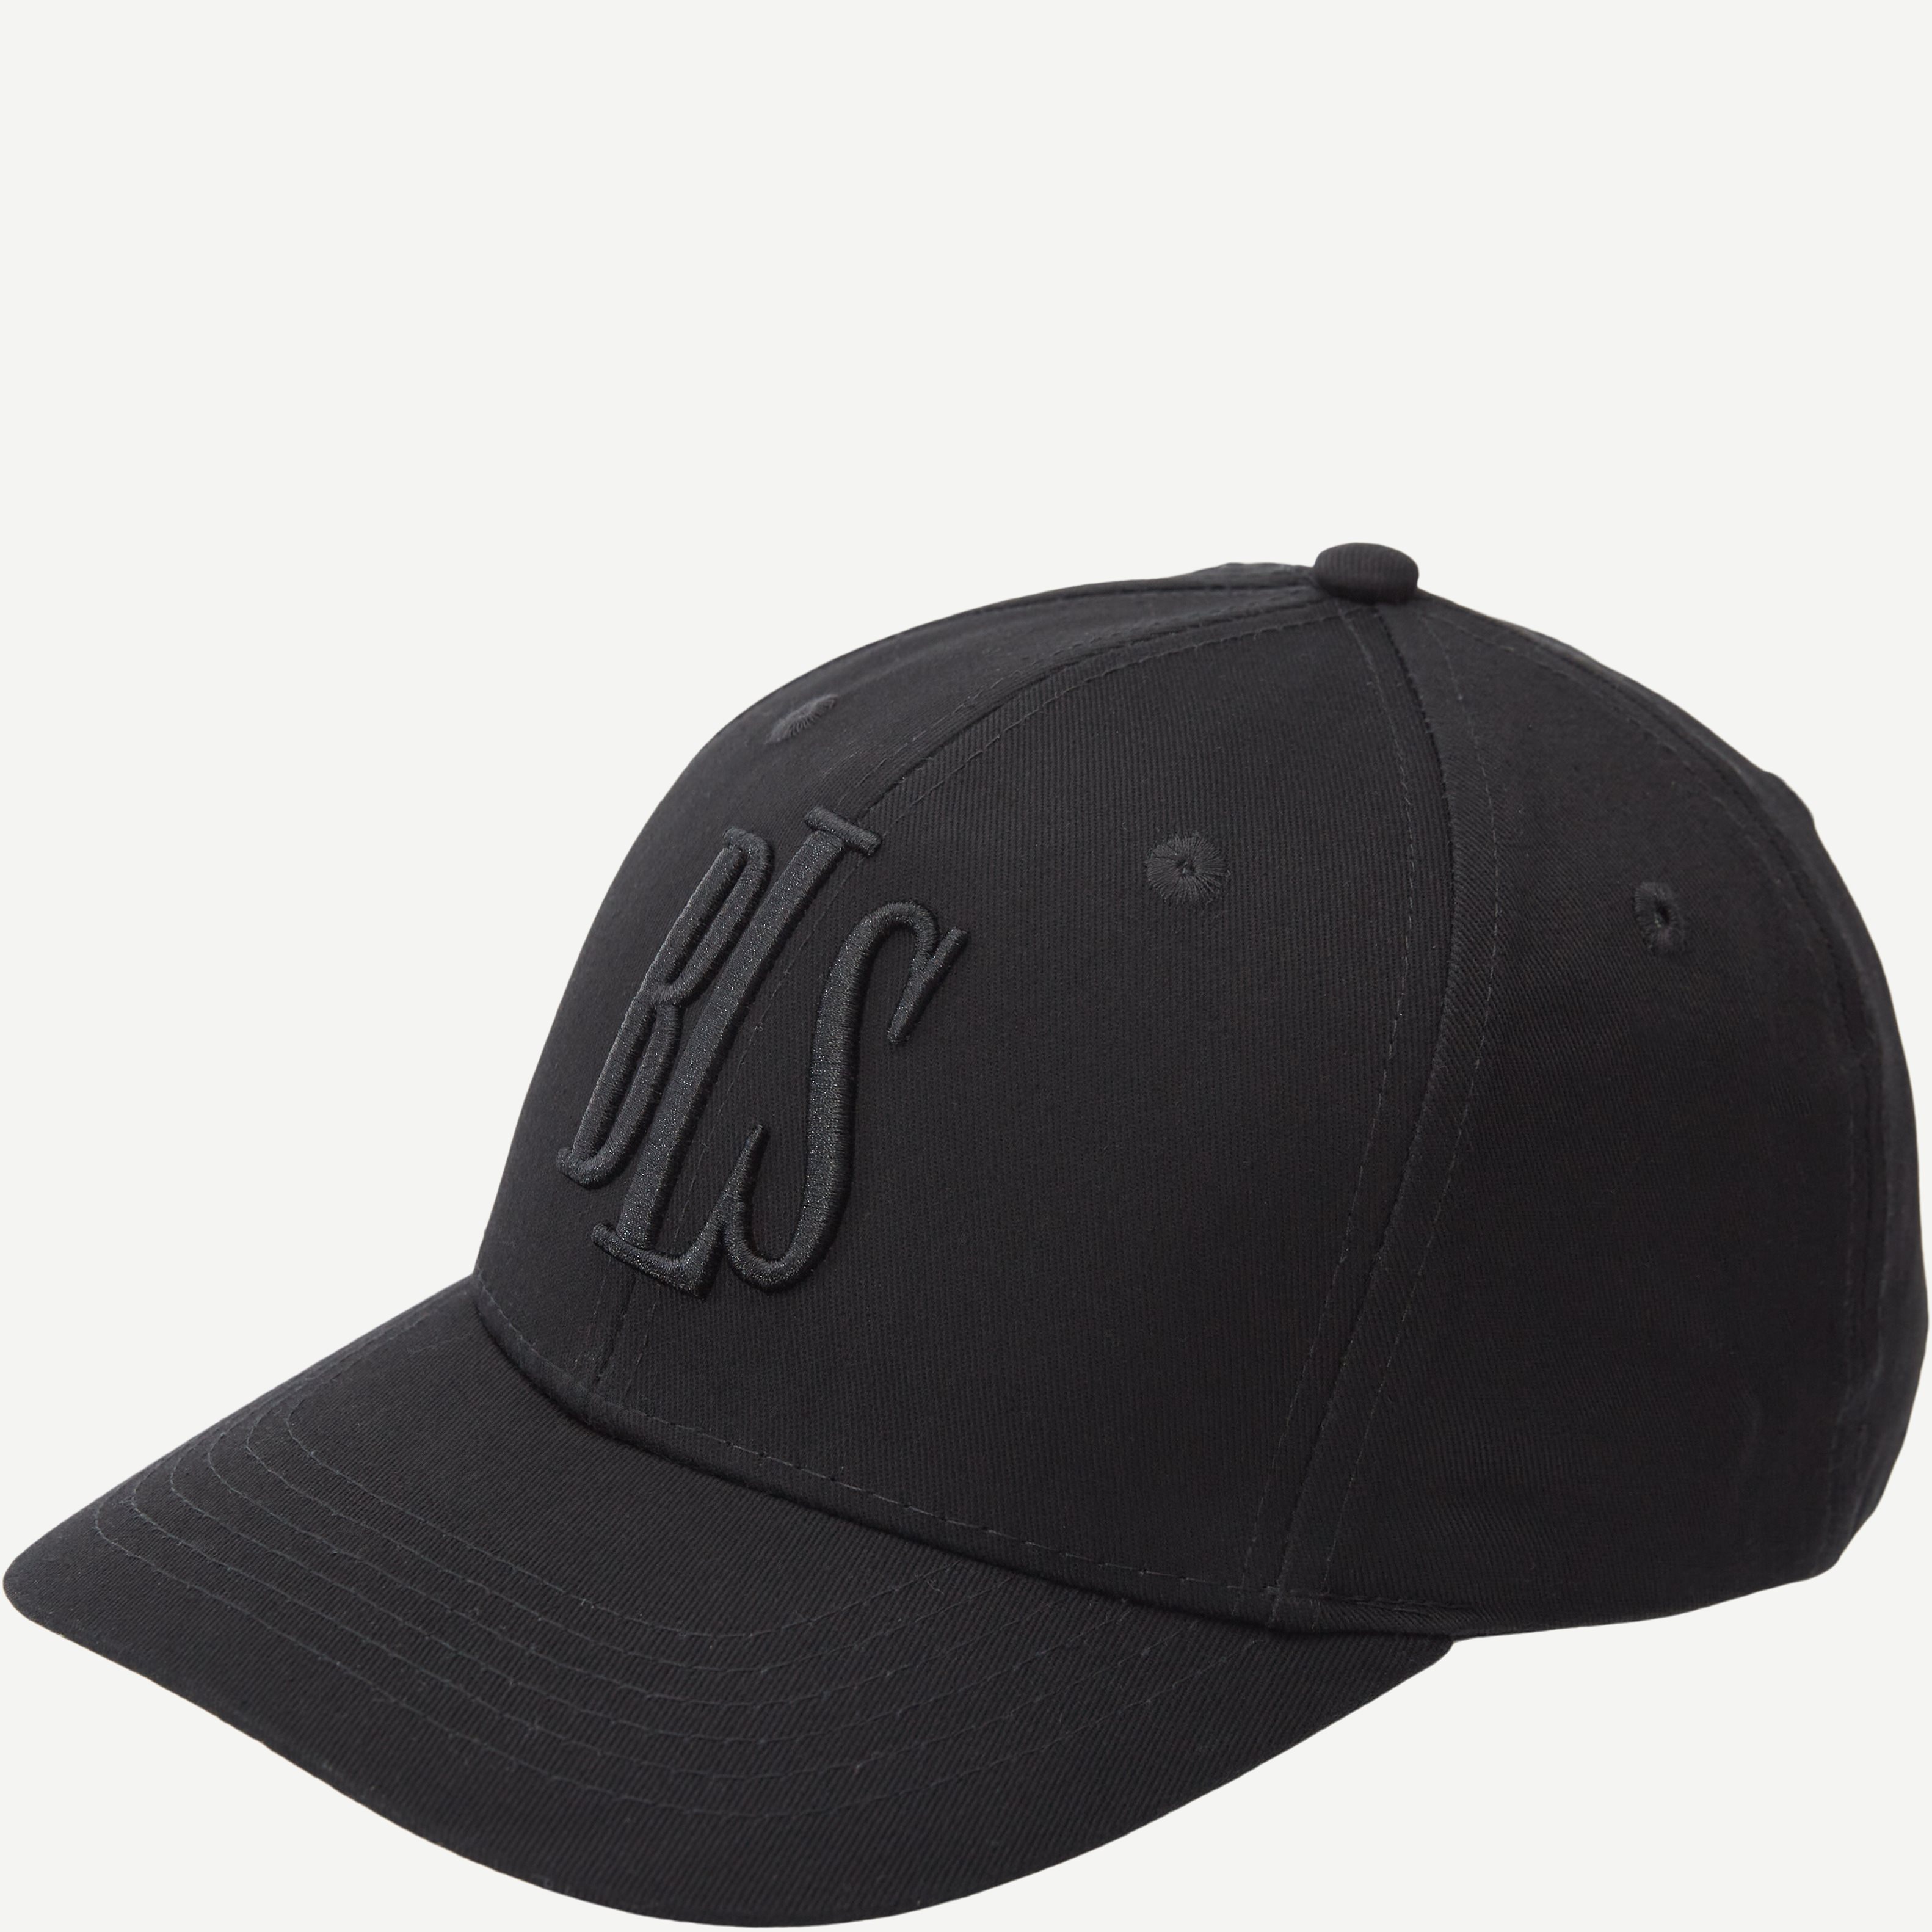 BLS Caps CLASSIC BASEBALL CAP TONAL BLACK 99103 Black